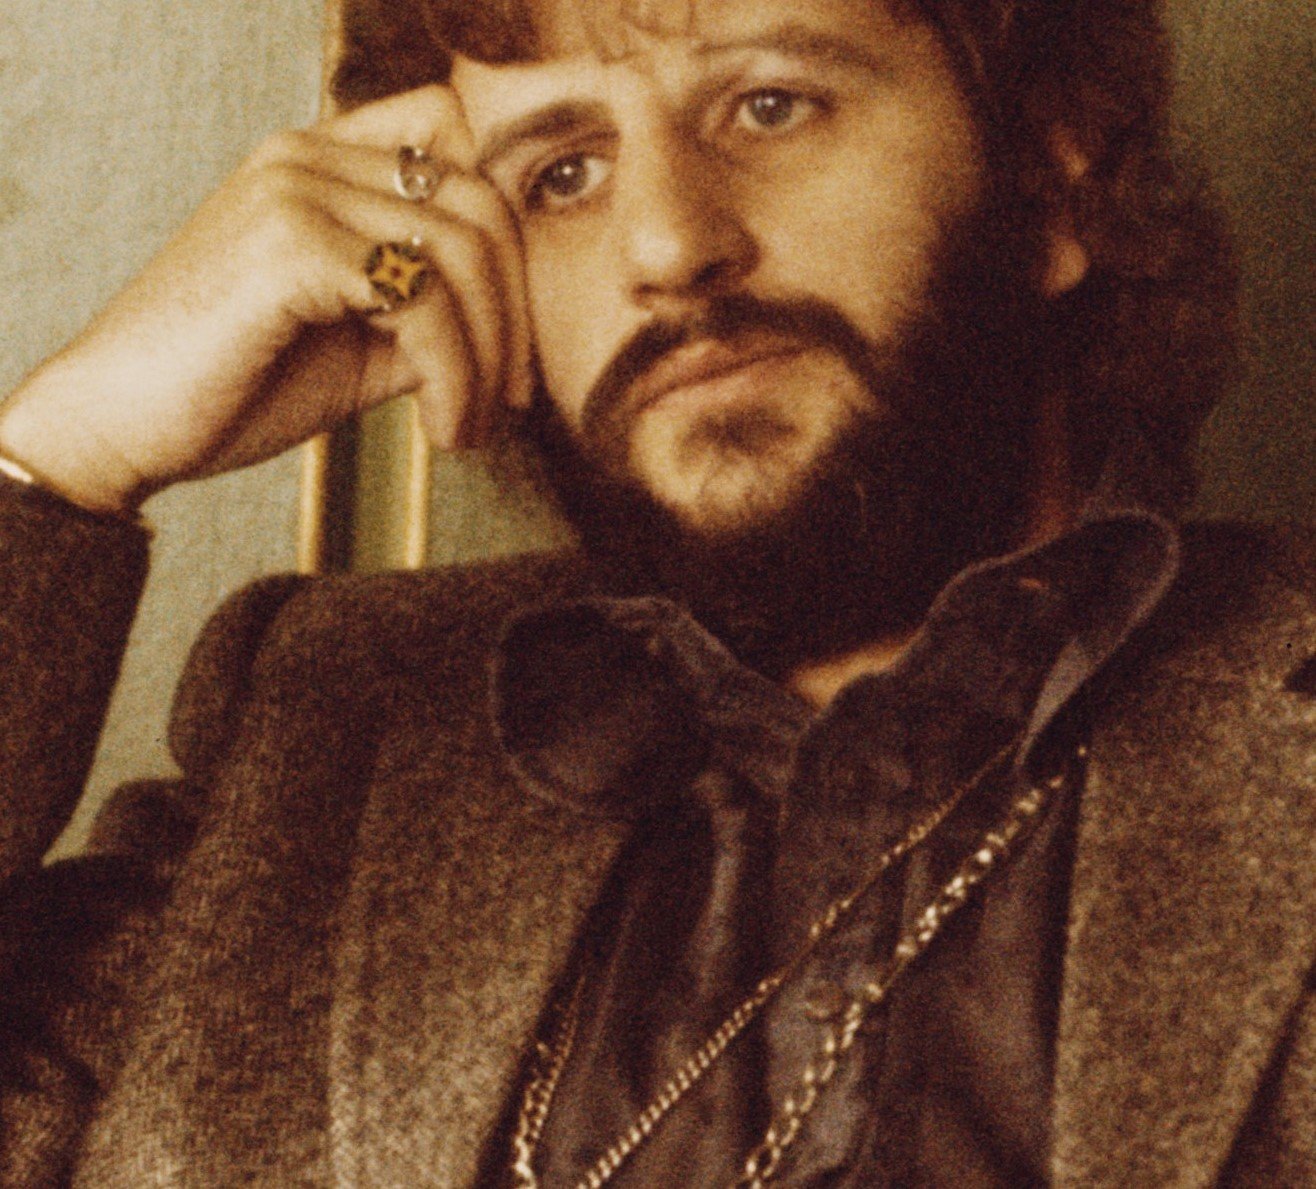 The Beatles' Ringo Starr wearing brown